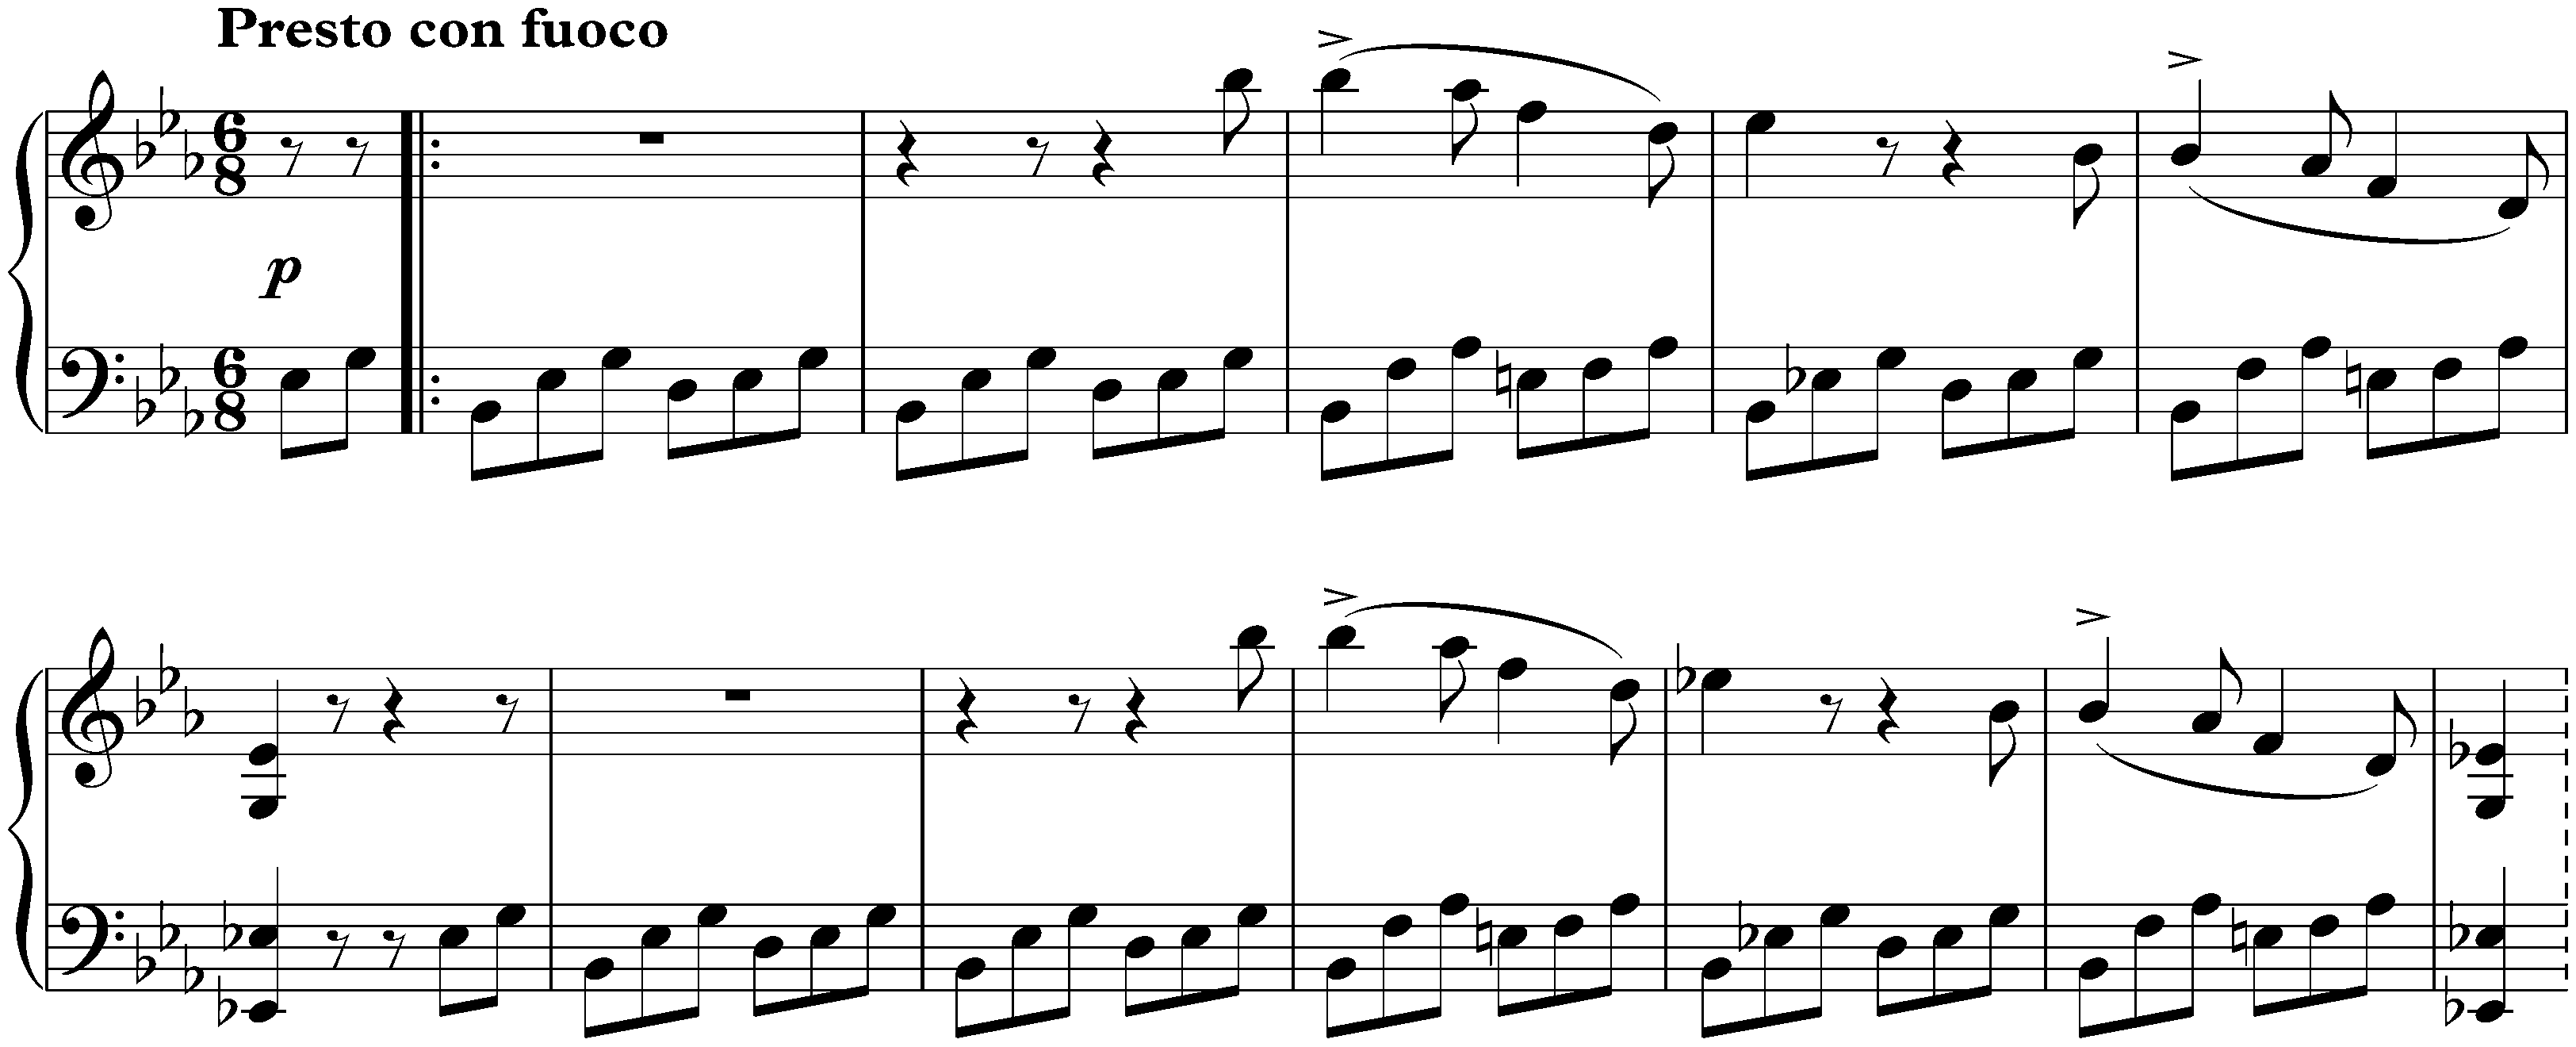 Sonata no. 18 in E-flat major, op. 31 no. 3; 4. Presto con fuoco